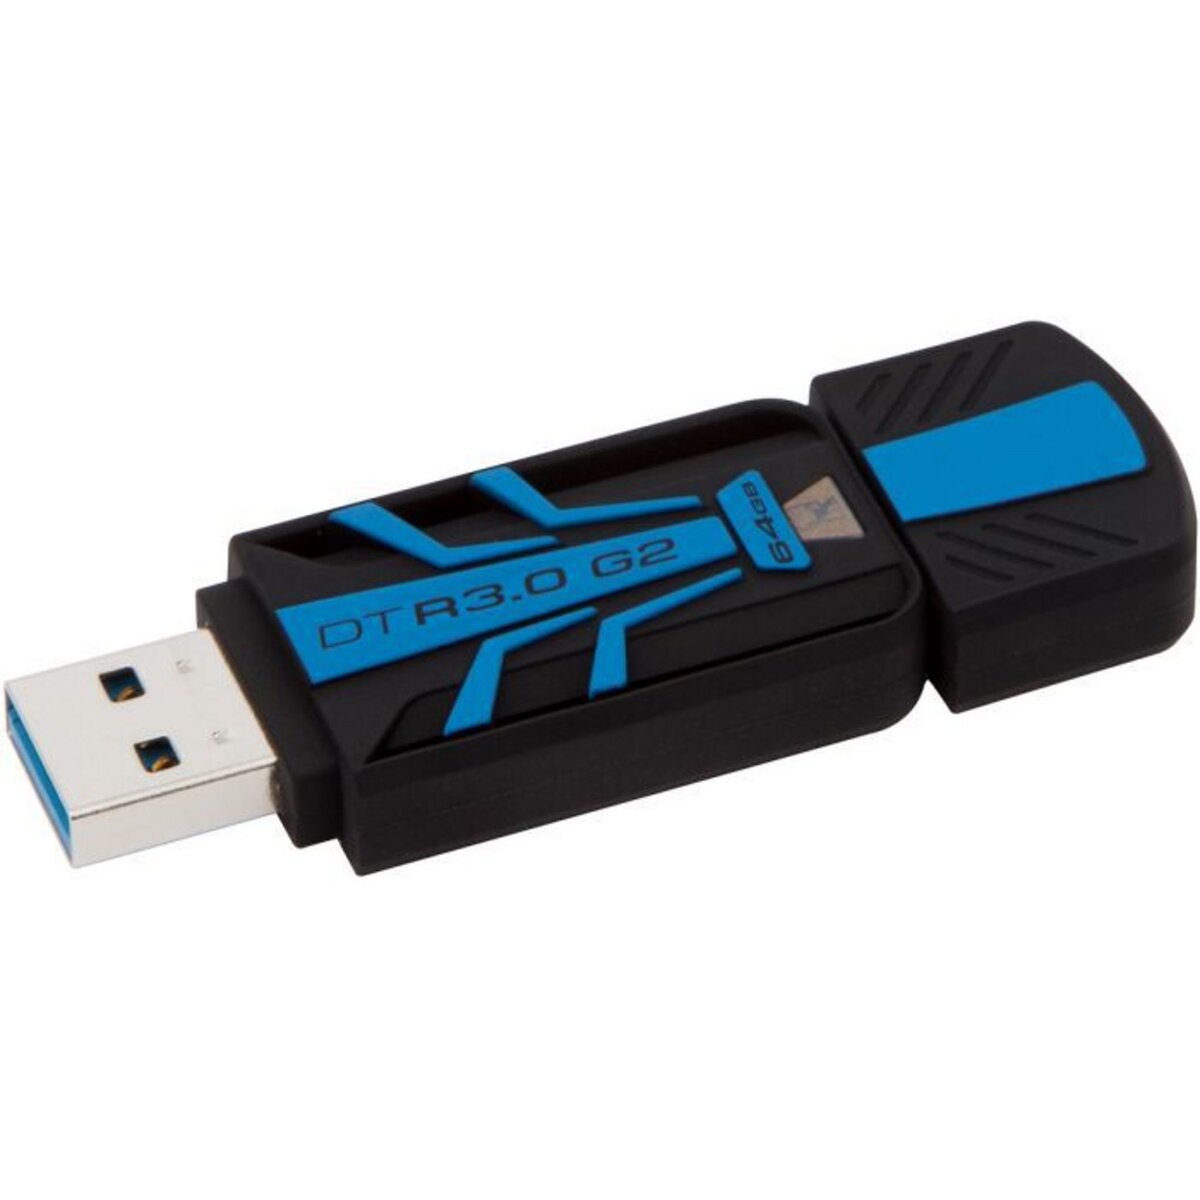 KINGSTON Cle usb 64GB USB 3.0 DATATRAVELER R30G2